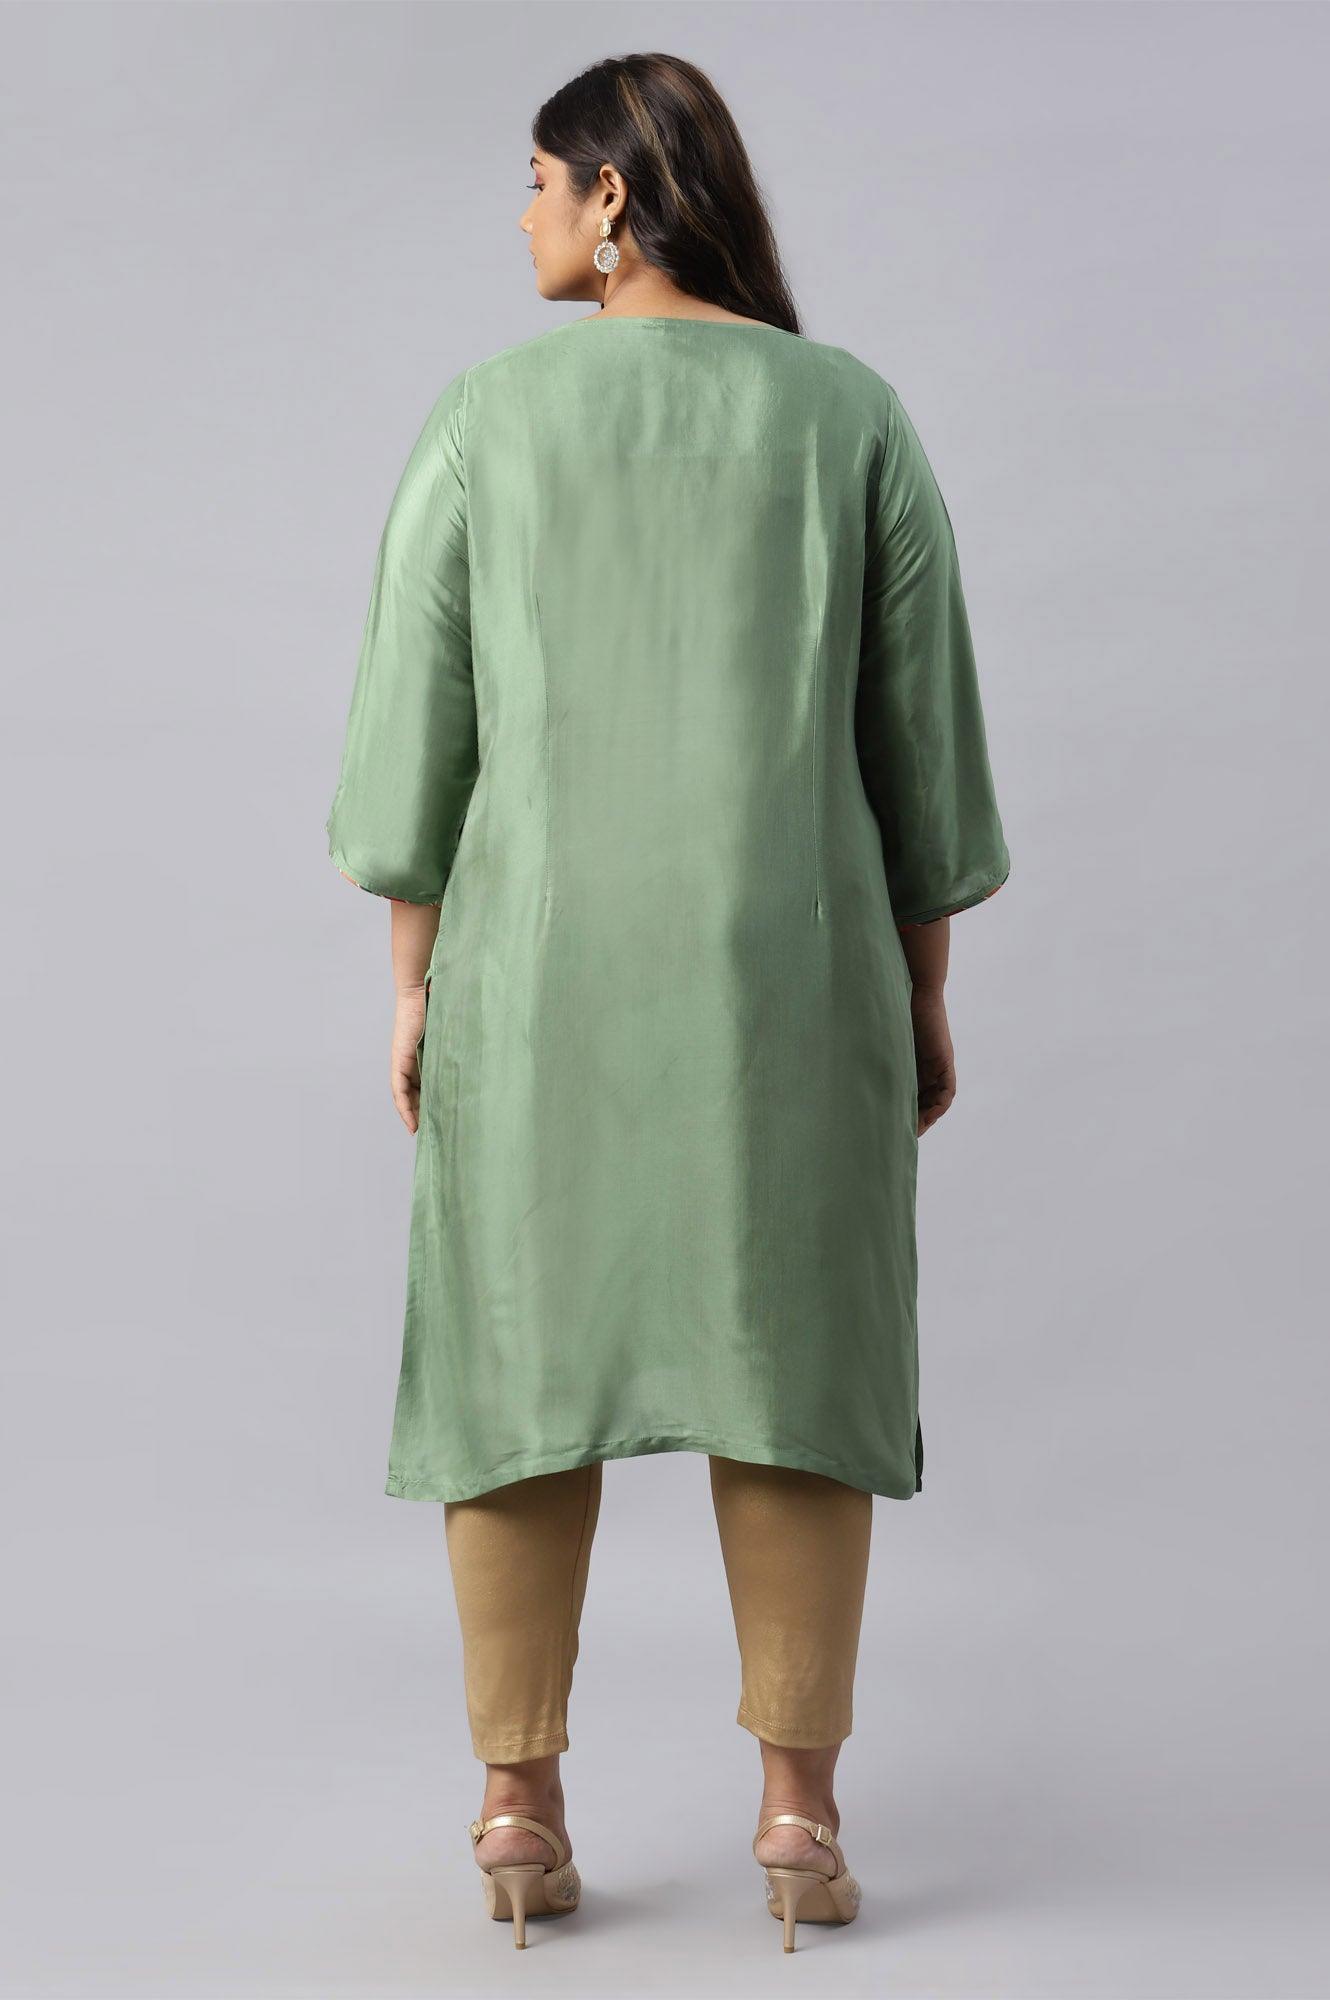 Green Straight Plus Size kurta With Embroidered Yoke - wforwoman